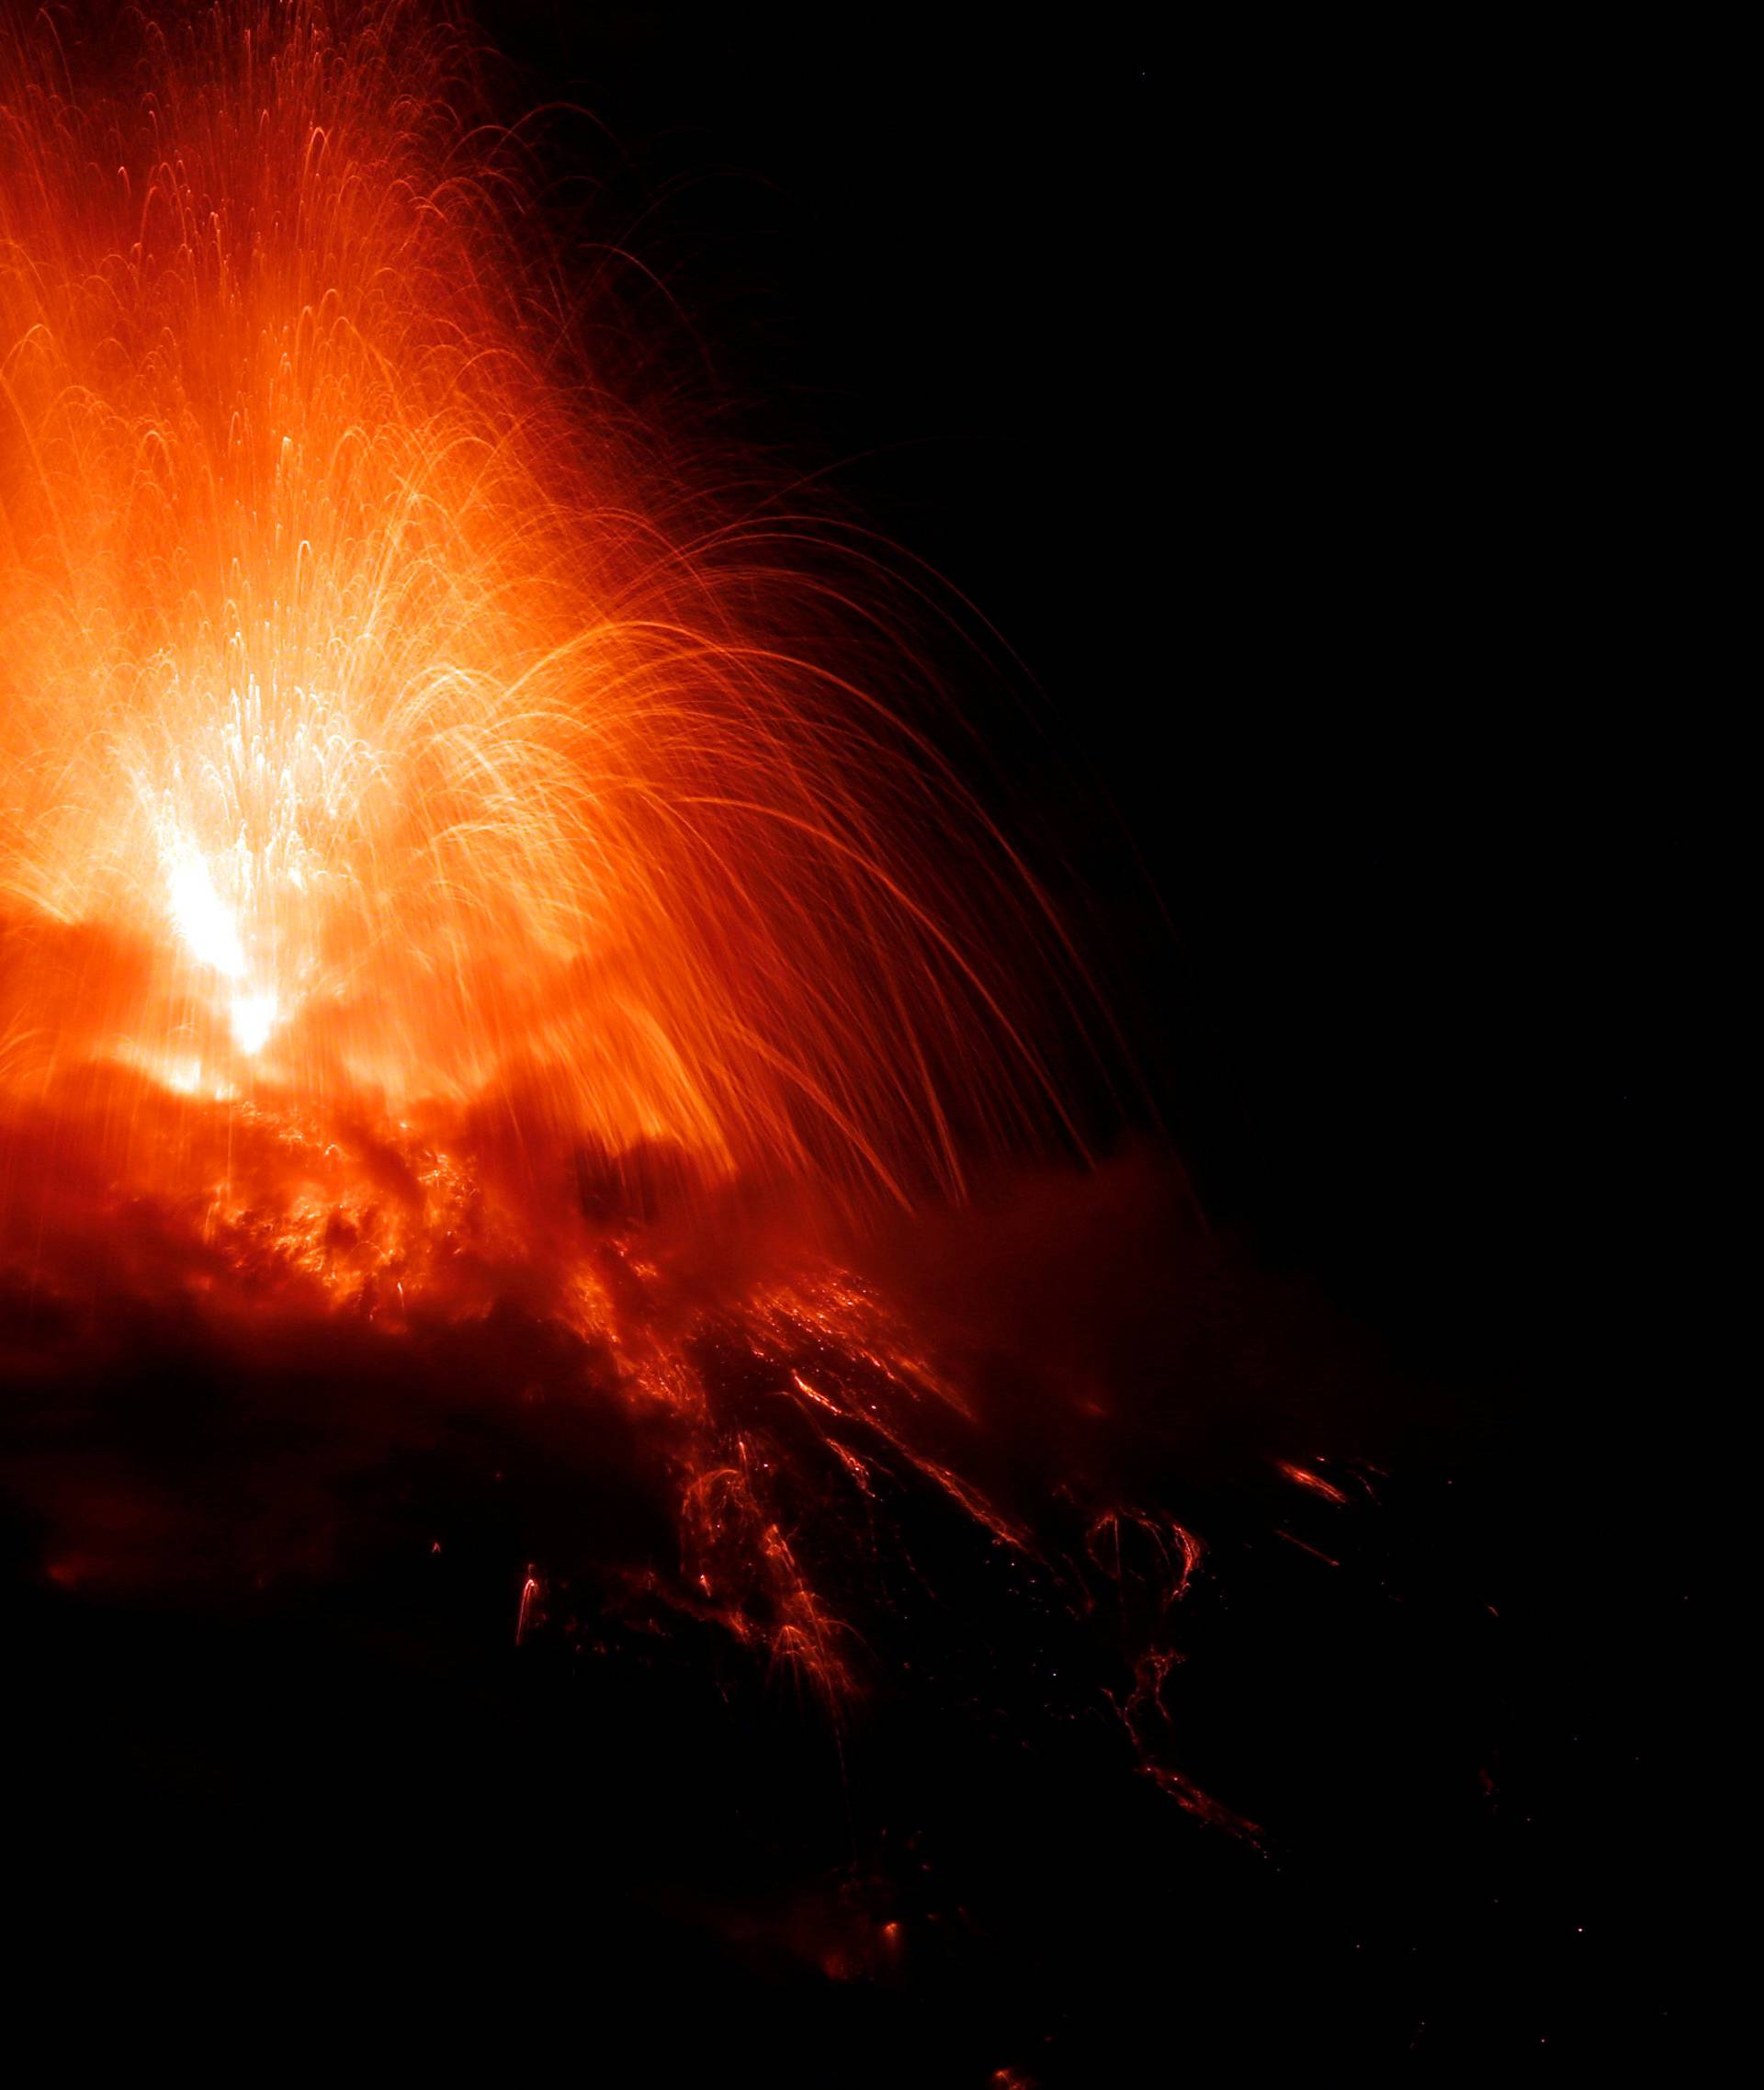 A general view shows Fuego volcano (Volcano of Fire) erupting as seen from San Juan Alotenango